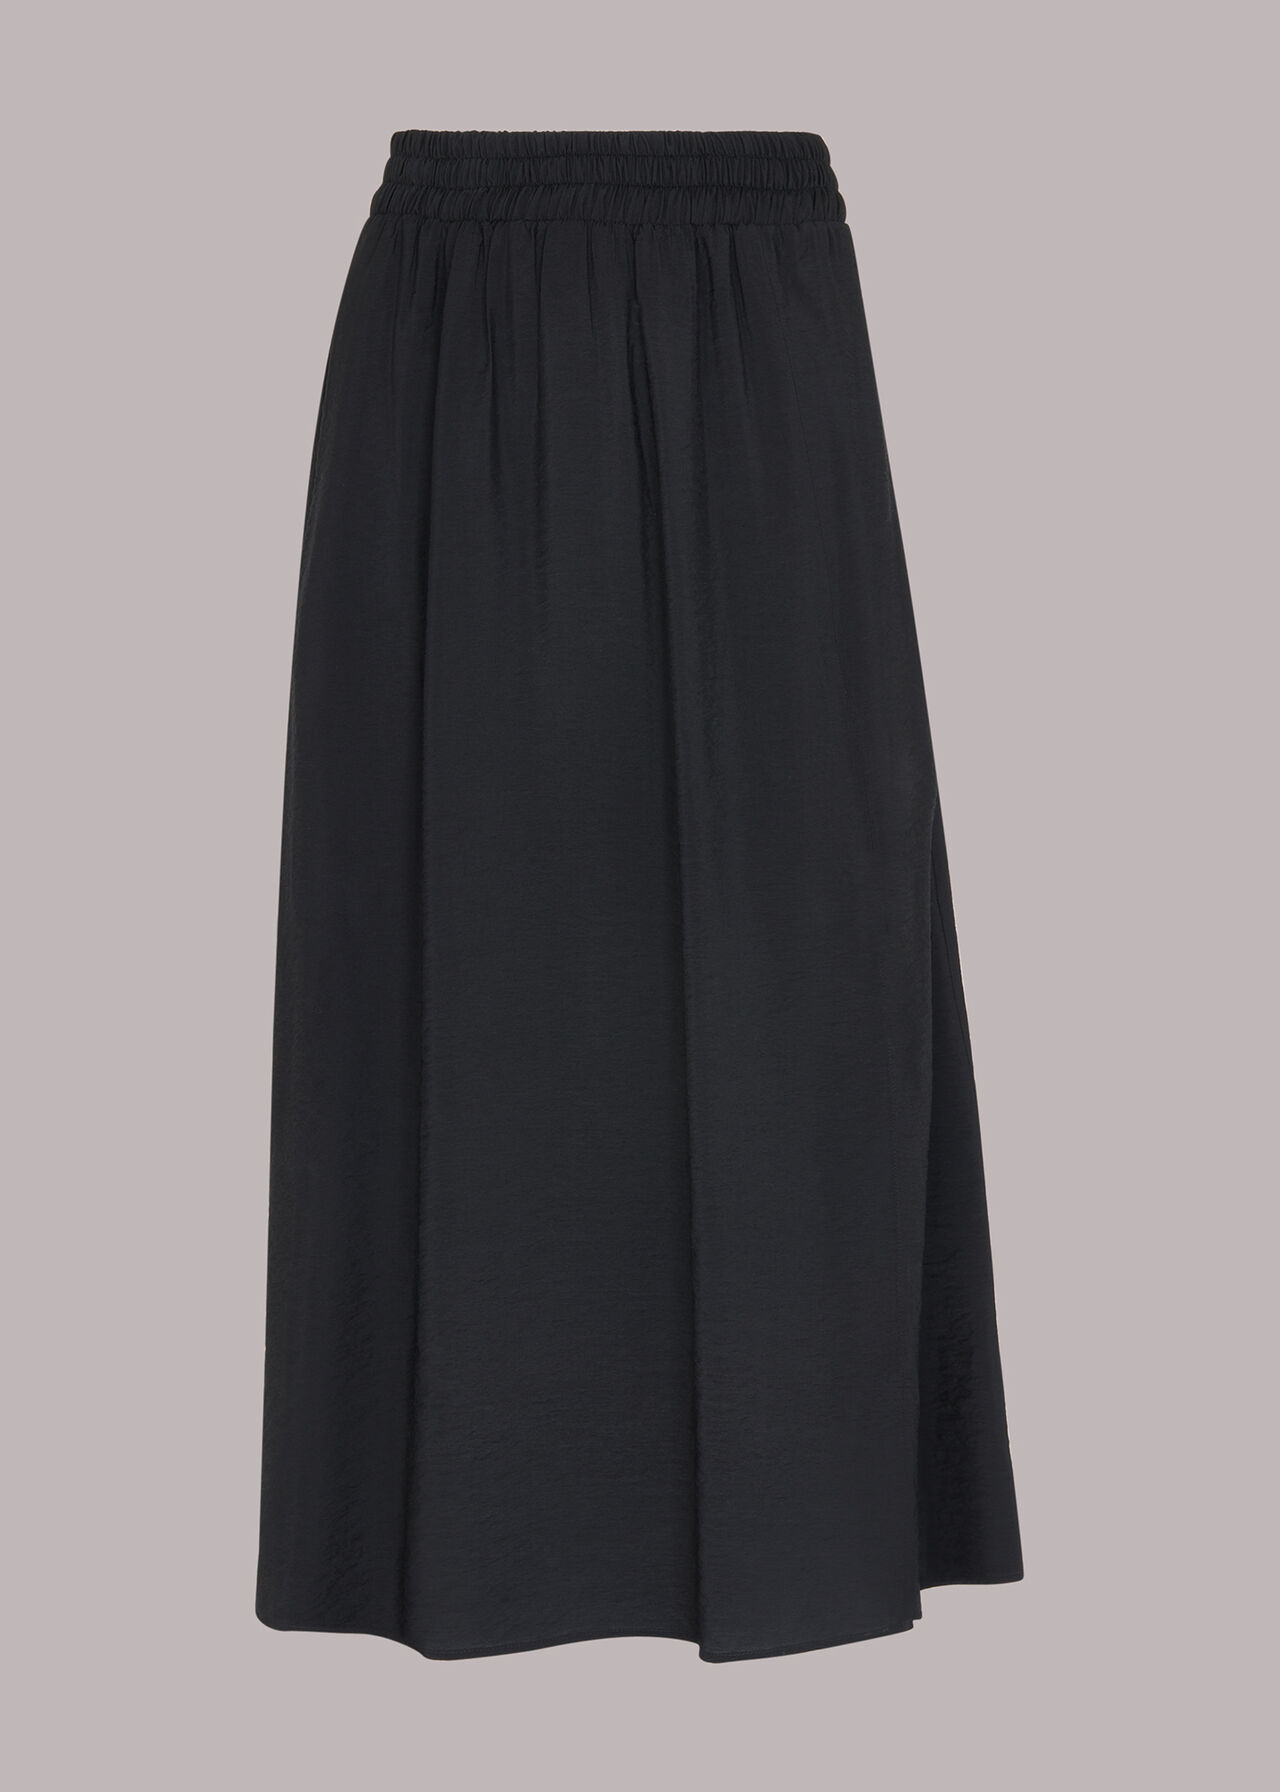 Black Nicola Elasticated Waist Skirt | WHISTLES